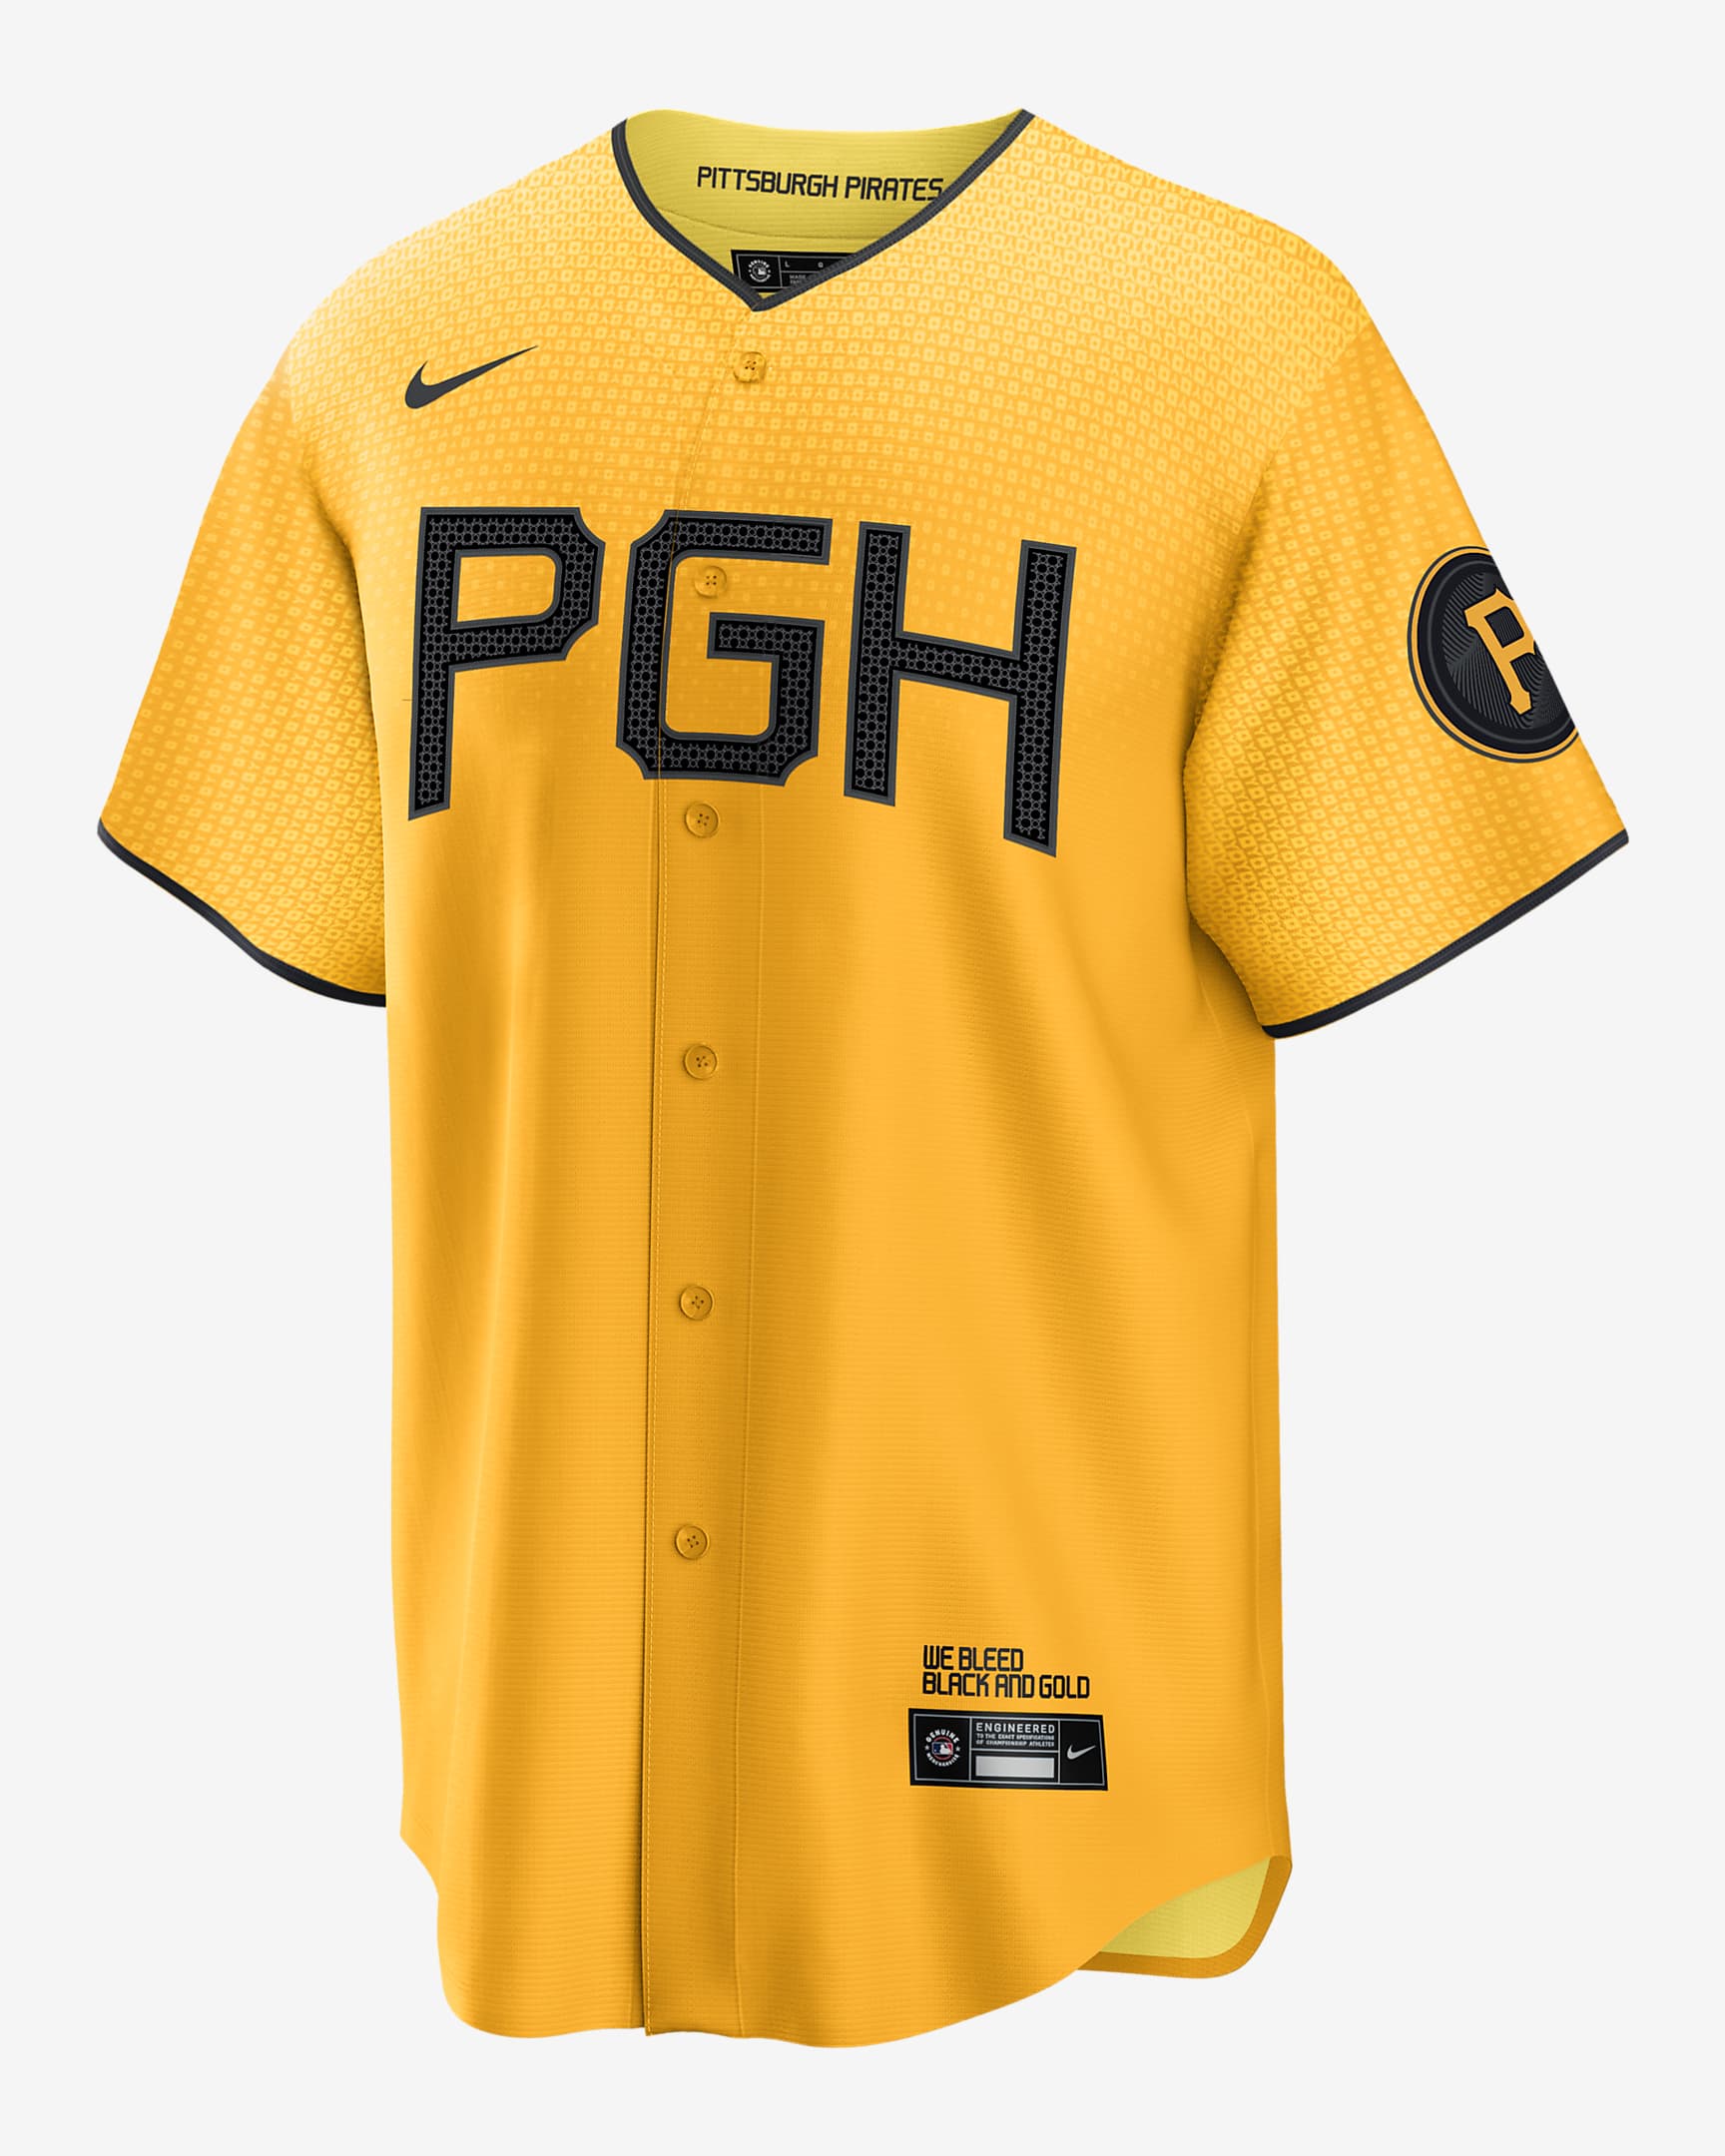 MLB Pittsburgh Pirates City Connect (Roberto Clemente) Men's Replica Baseball Jersey